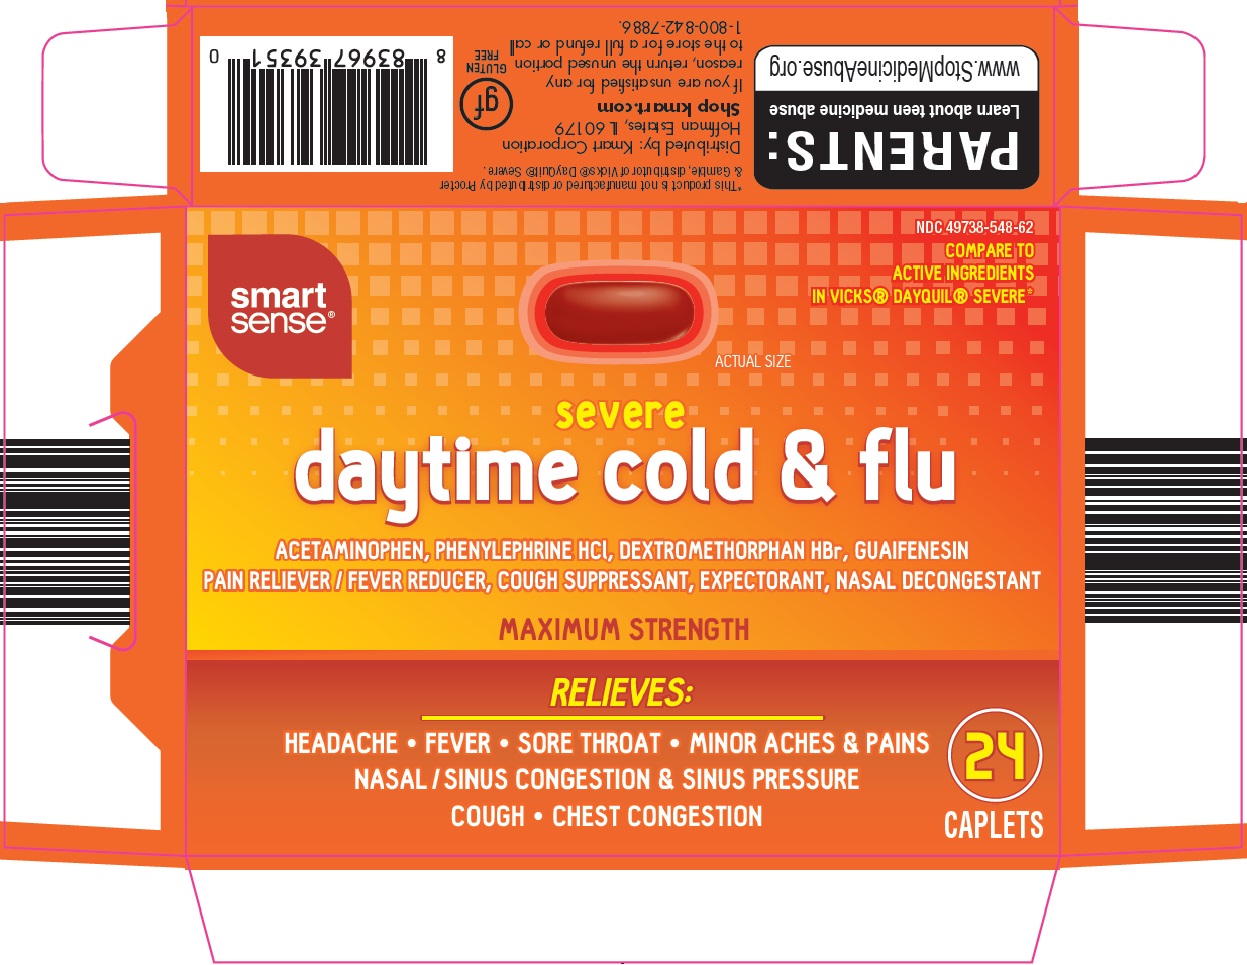 Smart Sense daytime cold & Flu image 1.jpg